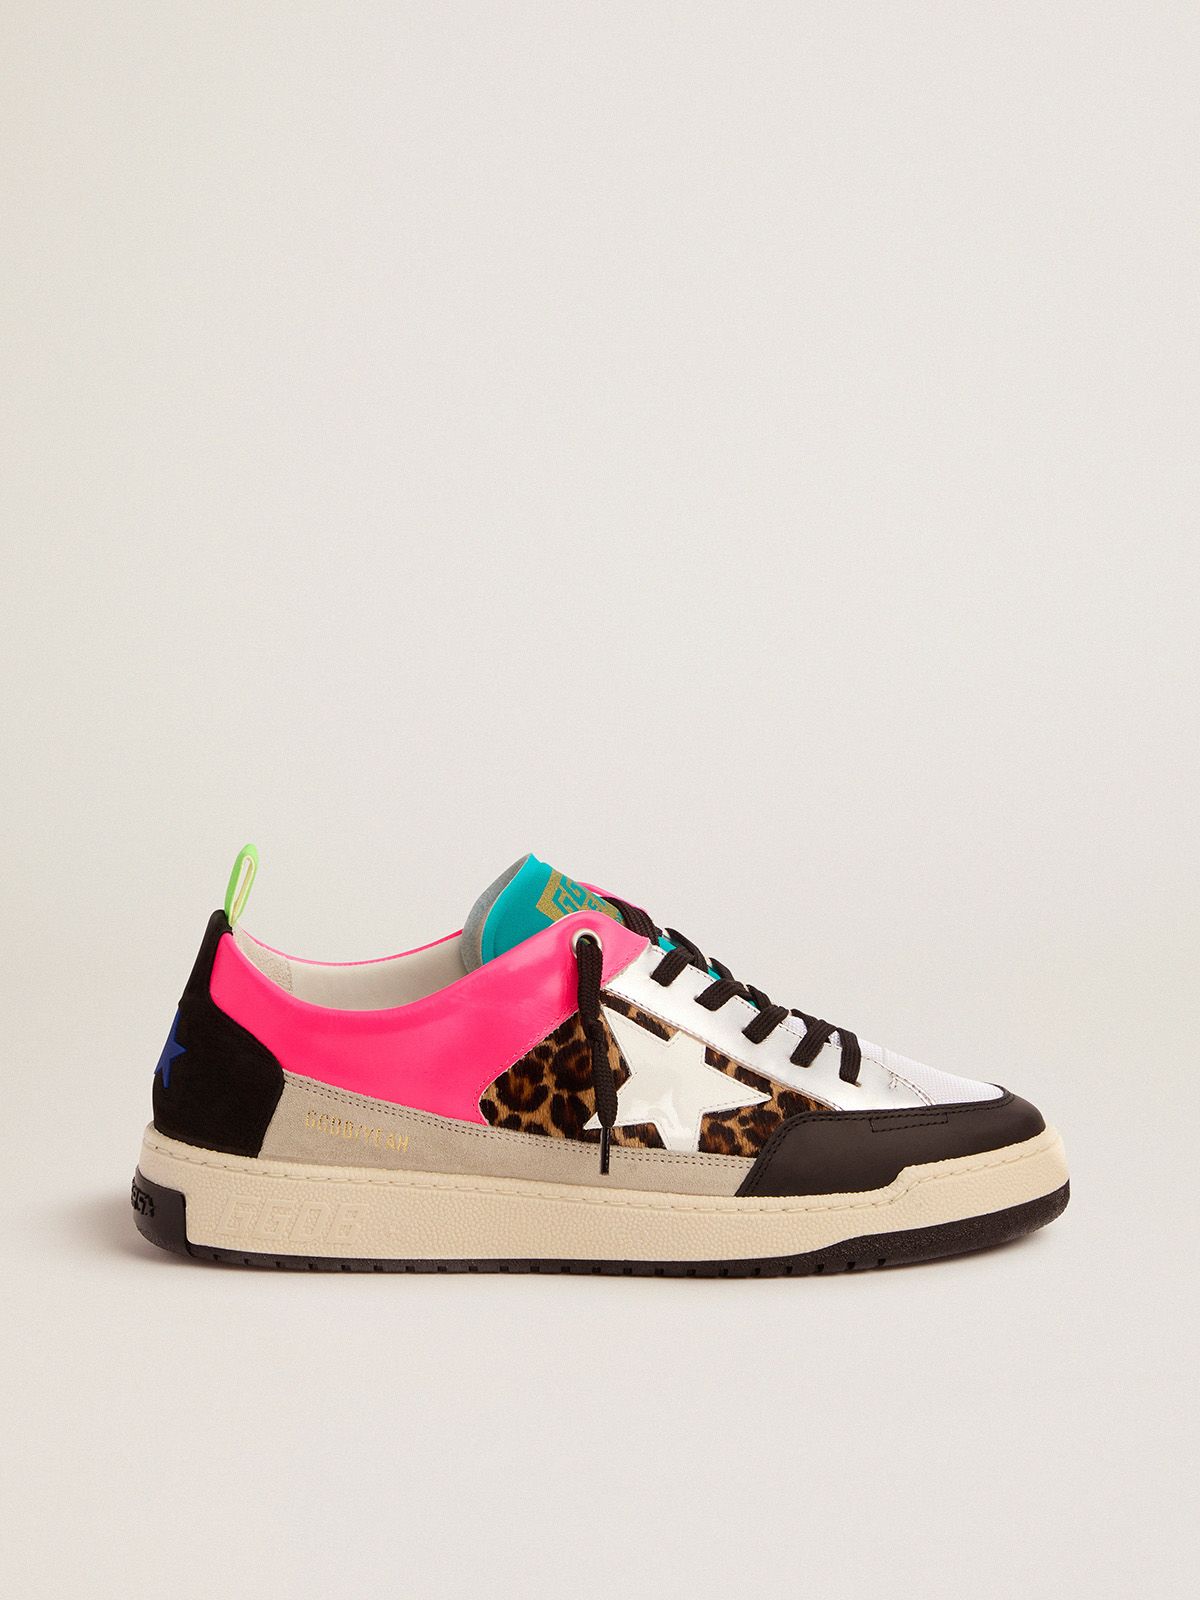 Men’s fuchsia and leopard-print Yeah sneakers